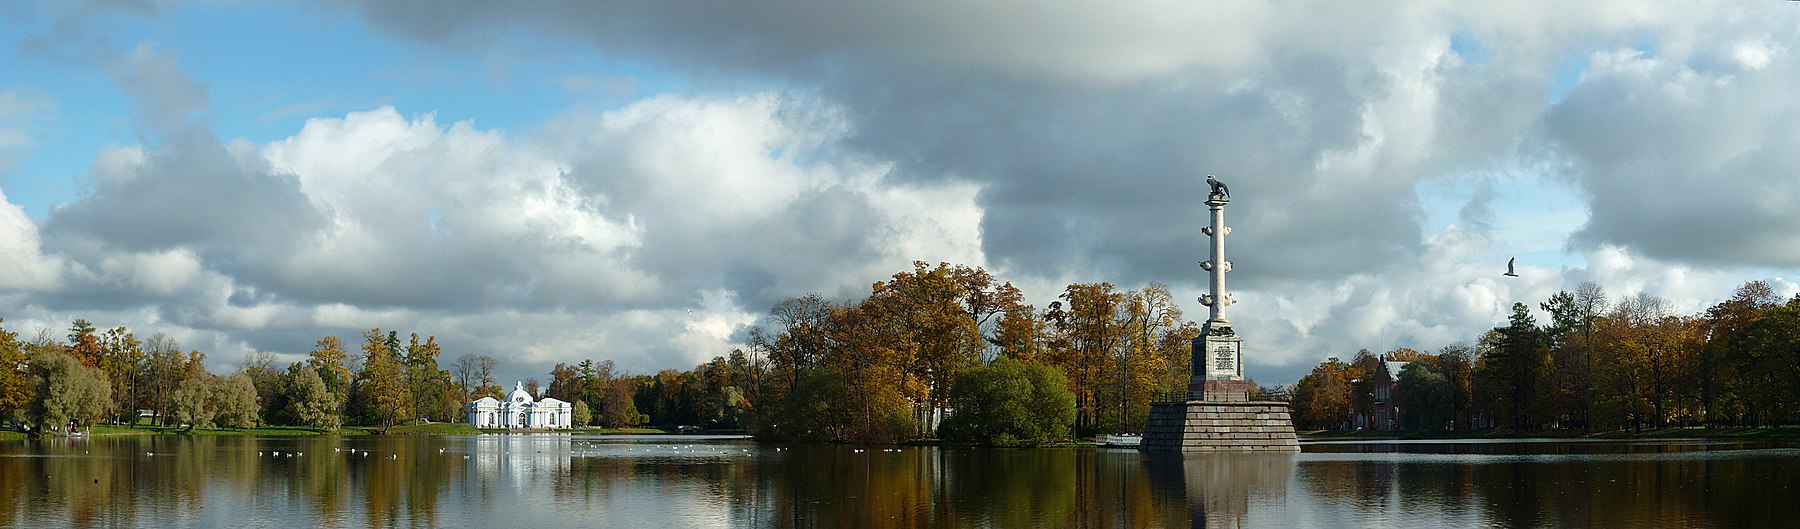 Зур буа, Екатерина паркы, Пушкин шәһәре, Кулланучы:Utro boyarskogo фотографиясе, CC BY-SA 3.0 лицензиясе